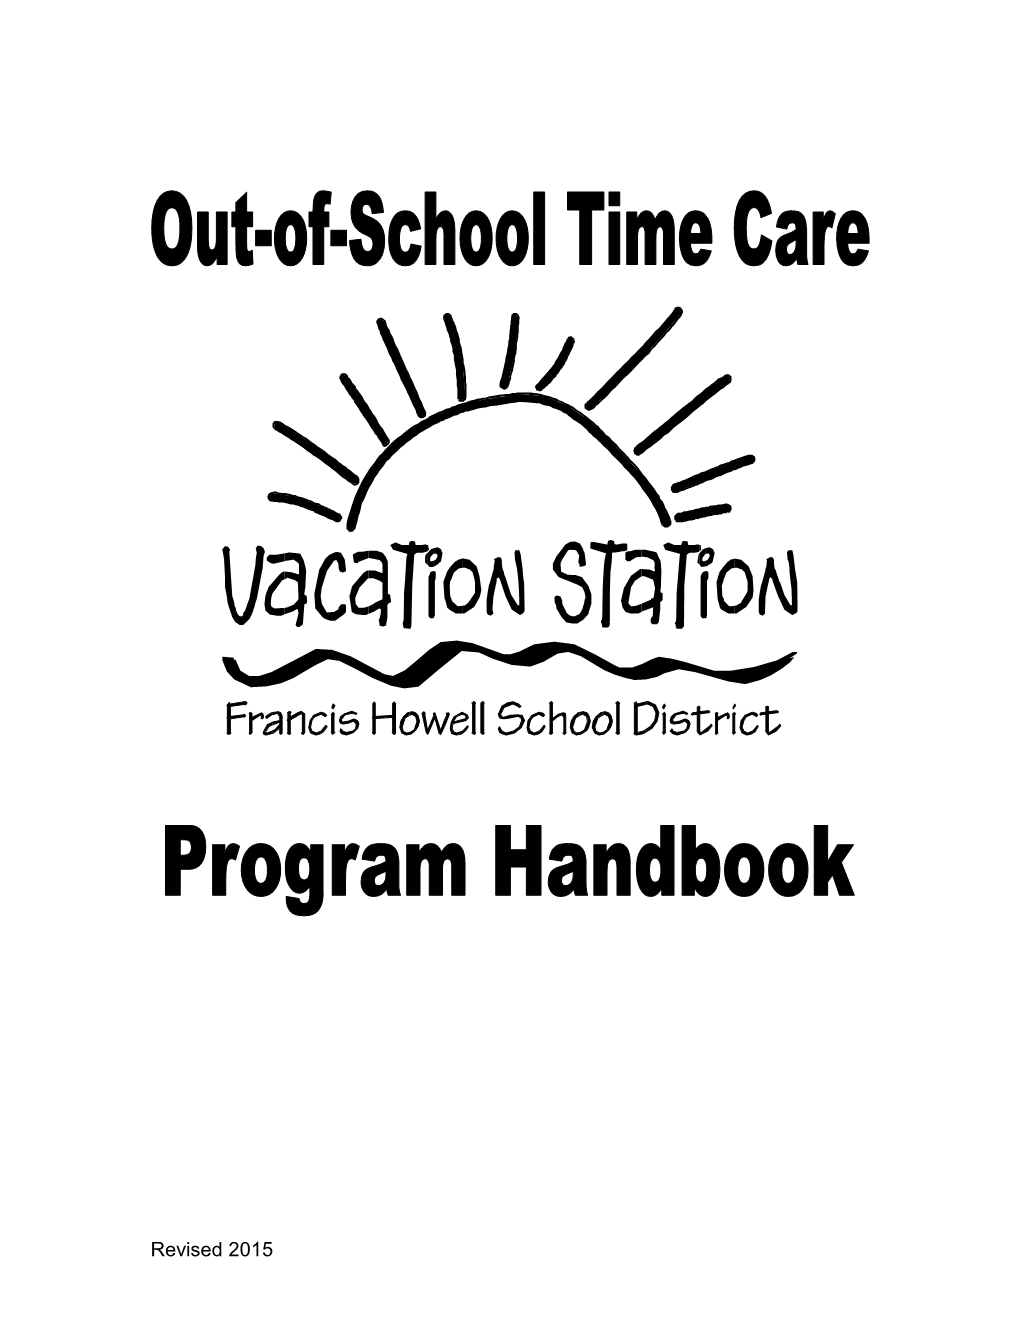 Vacation Station Handbook 2002